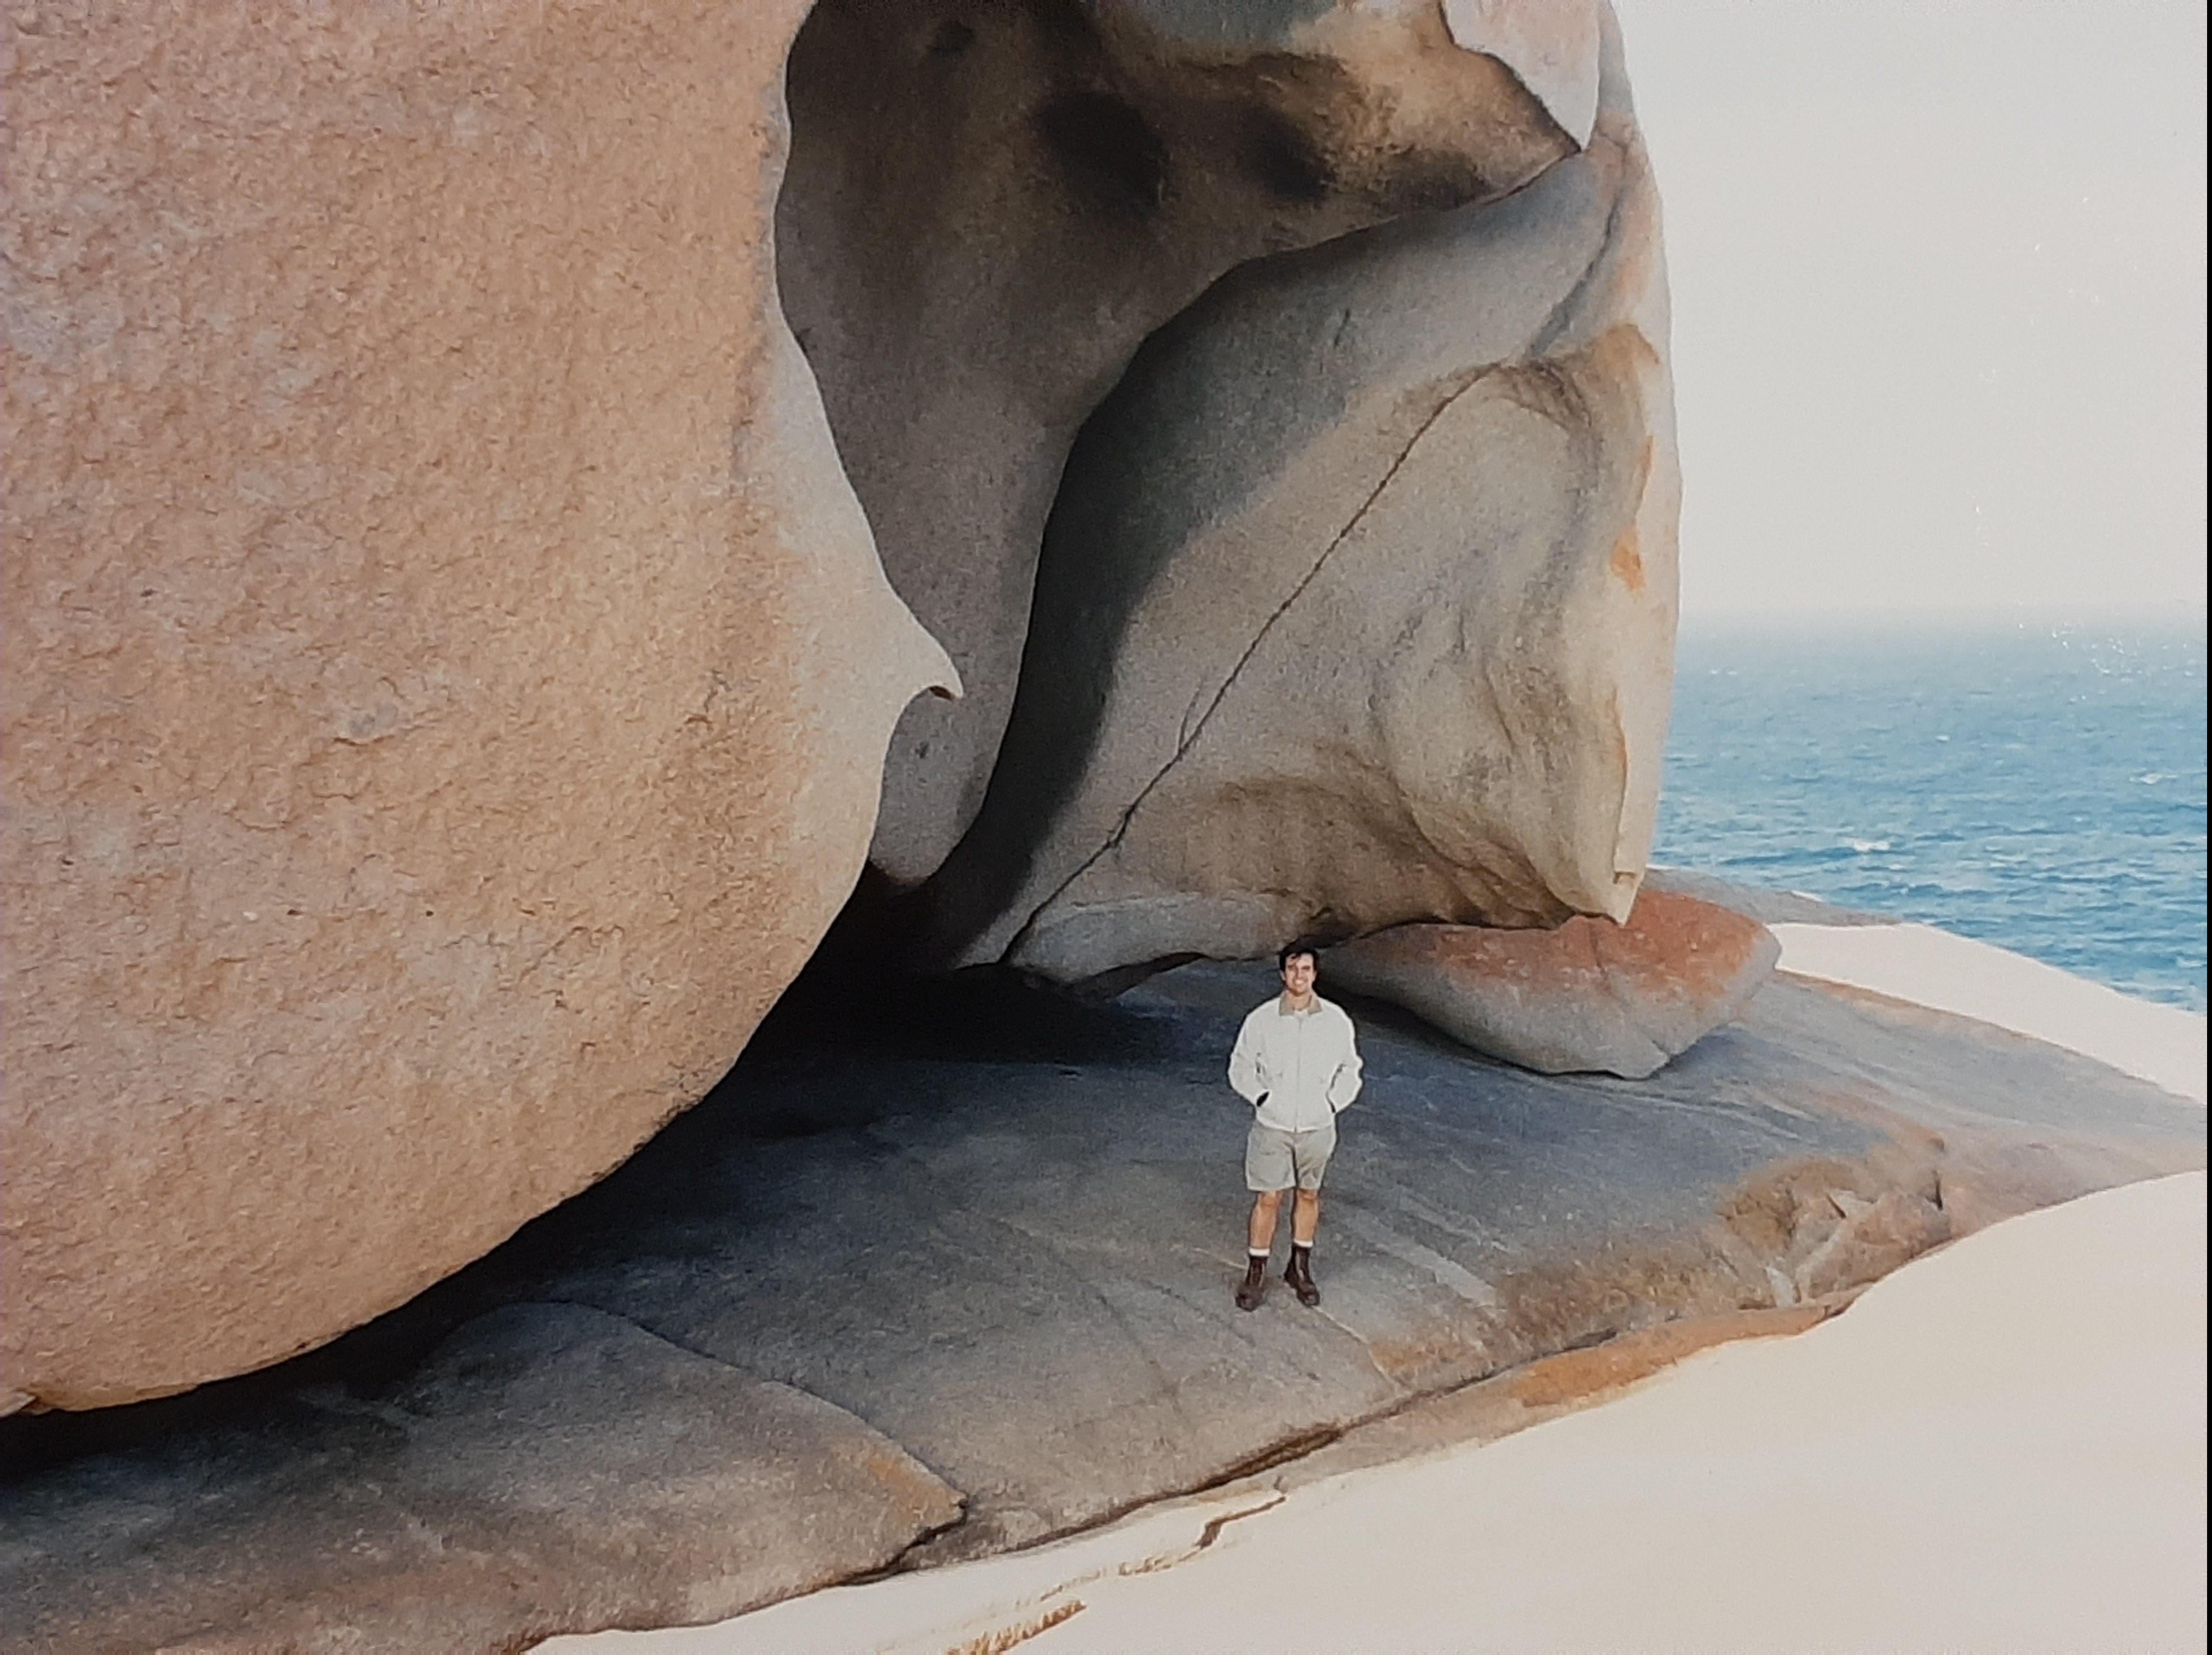 Remarkable Rocks - Kangaroo island - Australia